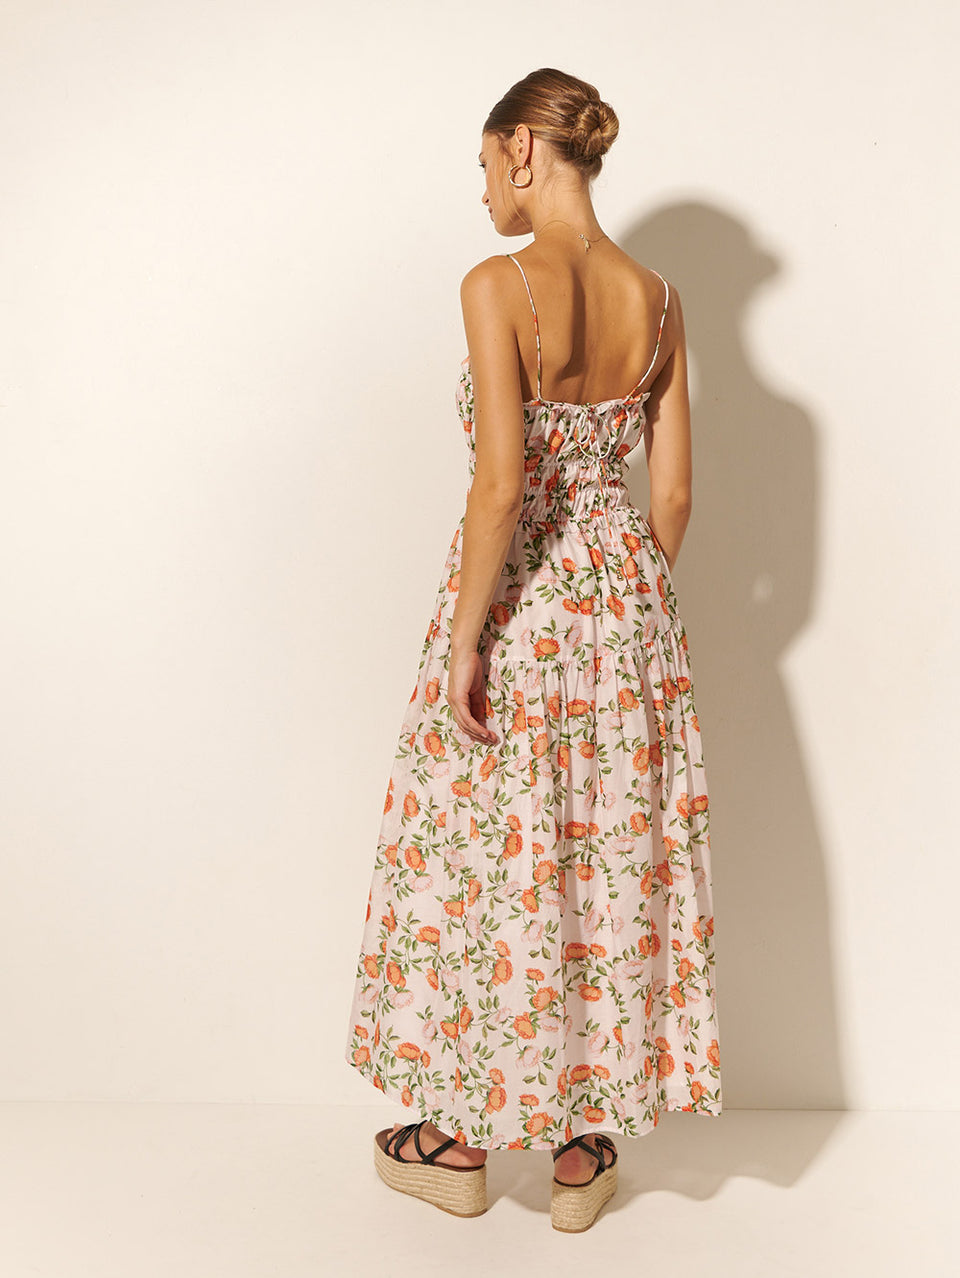 KIVARI Varenna Maxi Dress | Model wears Pink, Orange and Green Maxi Dress Back View